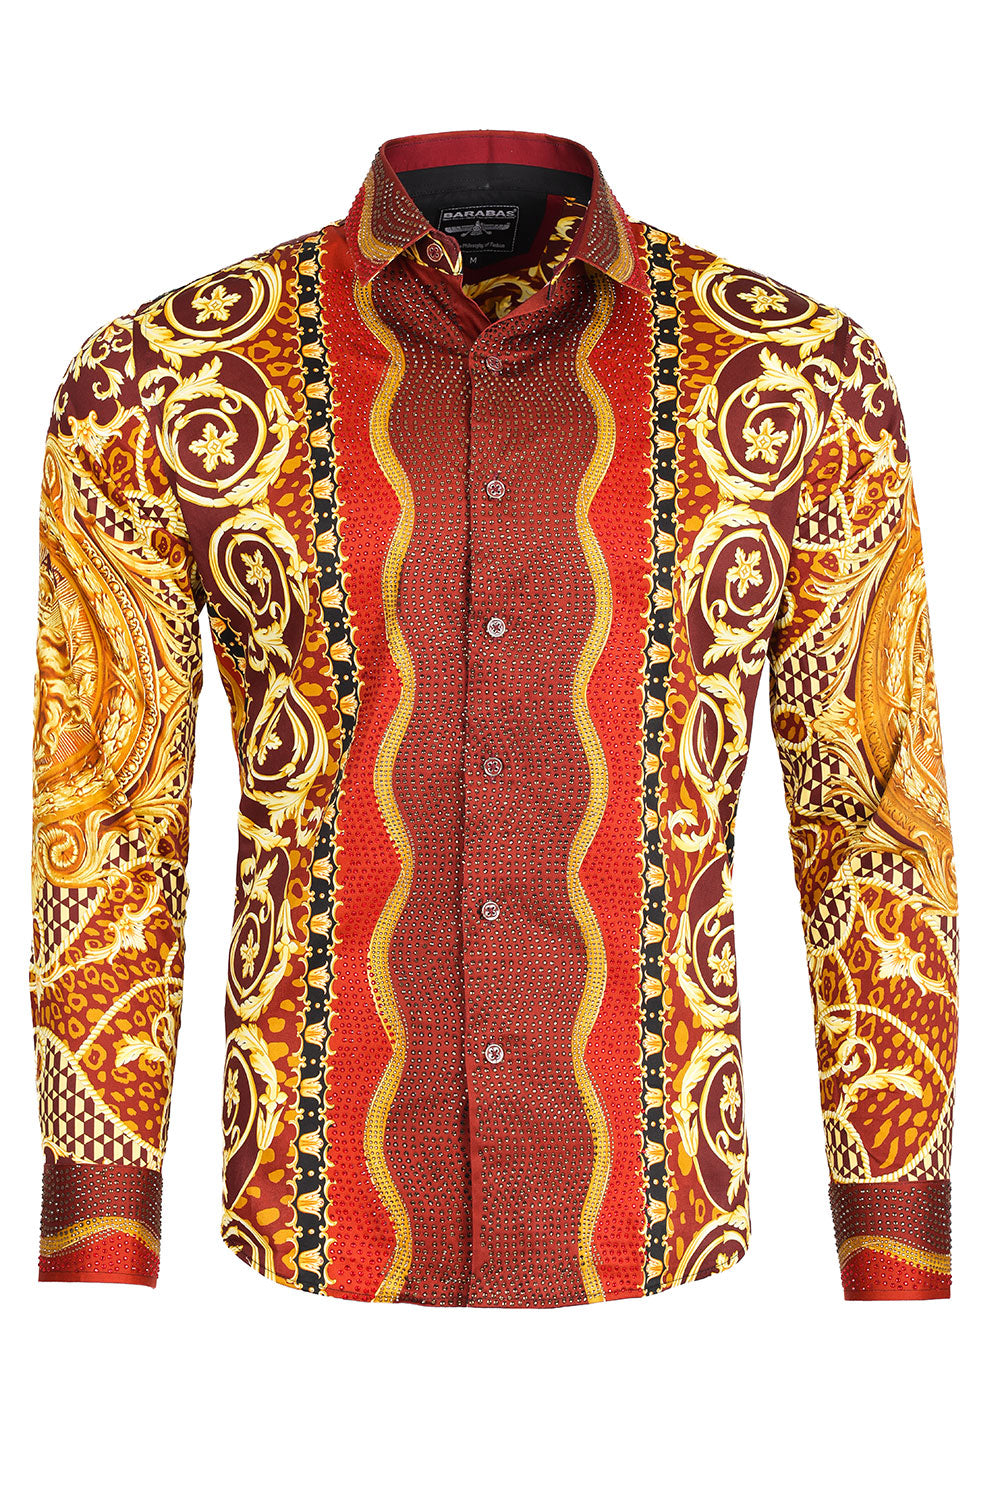 BARABAS Men's Rhinestone Medusa Floral Baroque leopard Shirt 2SPR221 Red